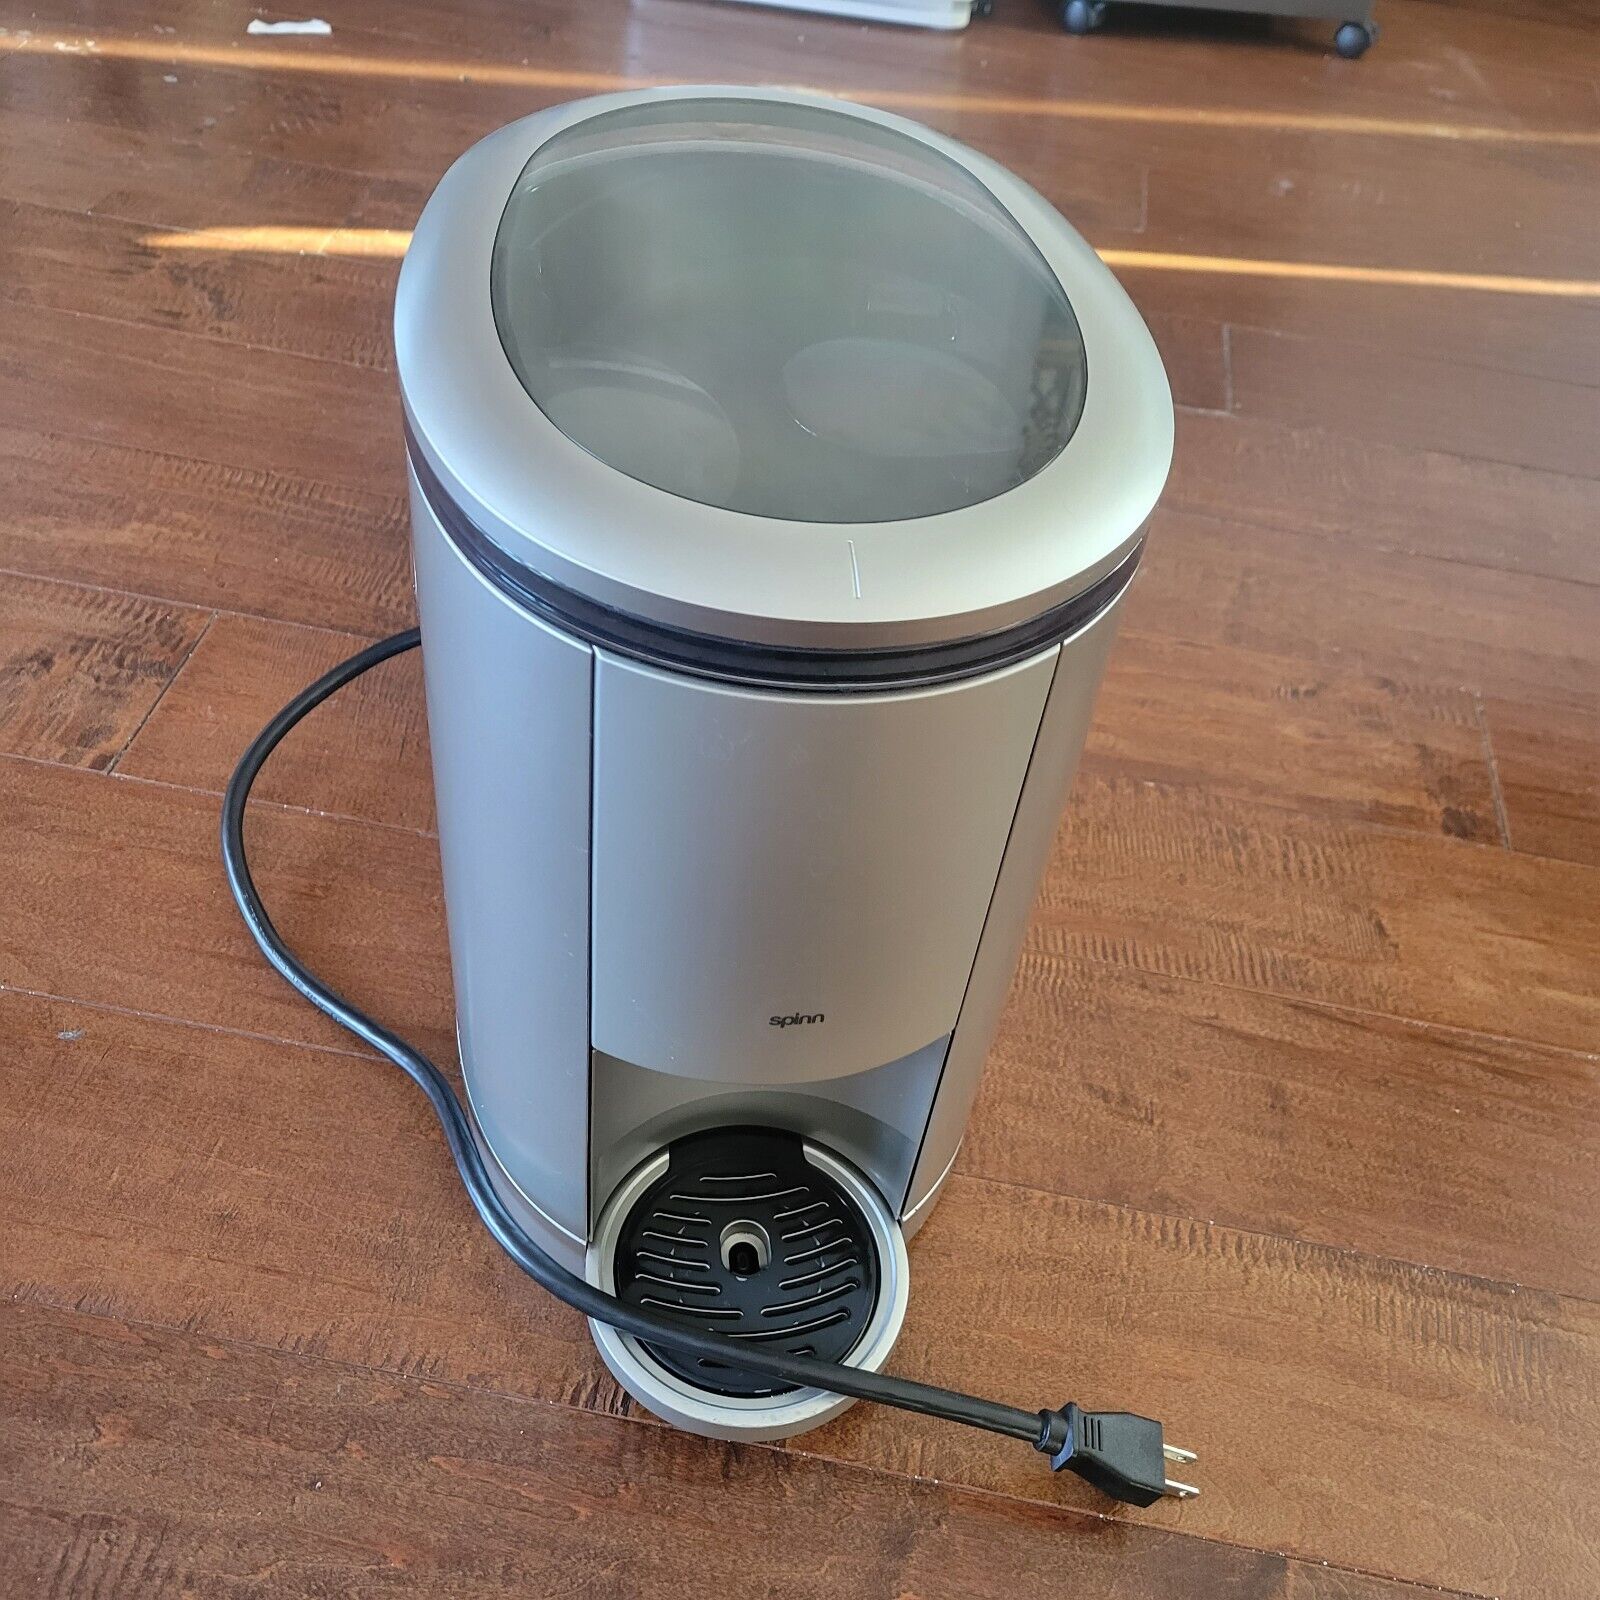 Spinn WiFi enabled coffee maker/espresso machine